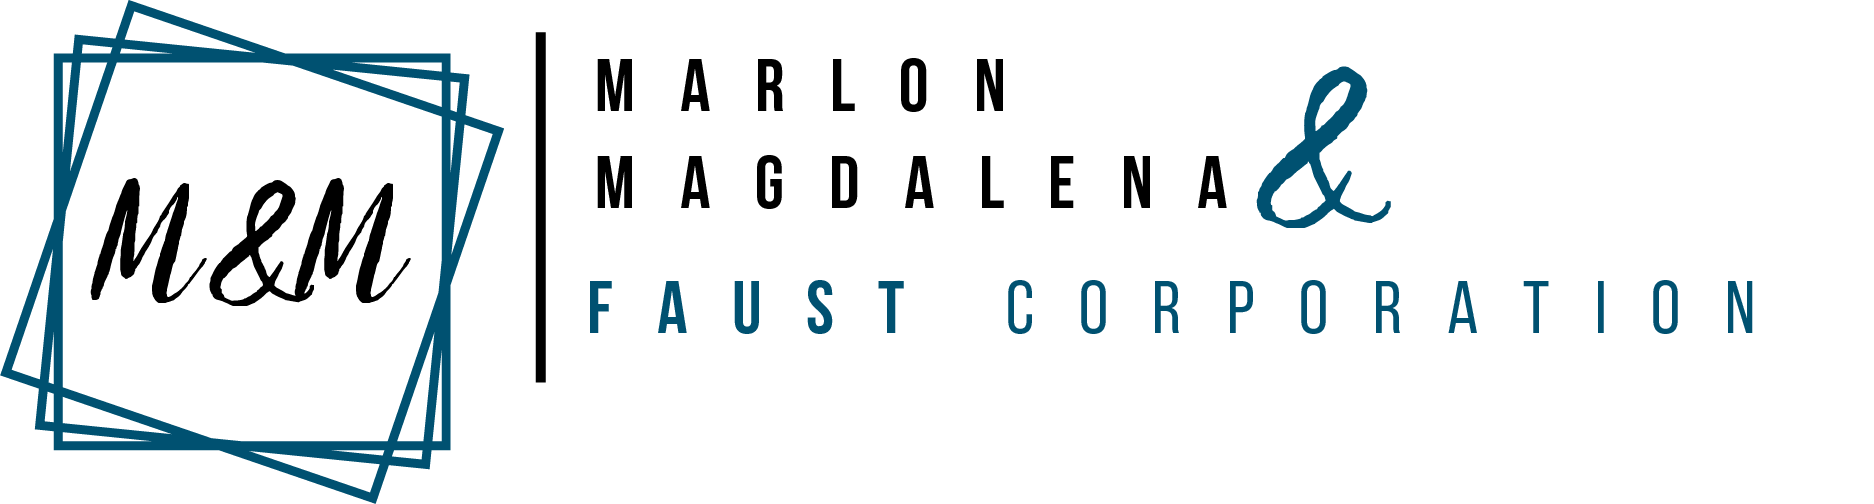 Faust Corporation